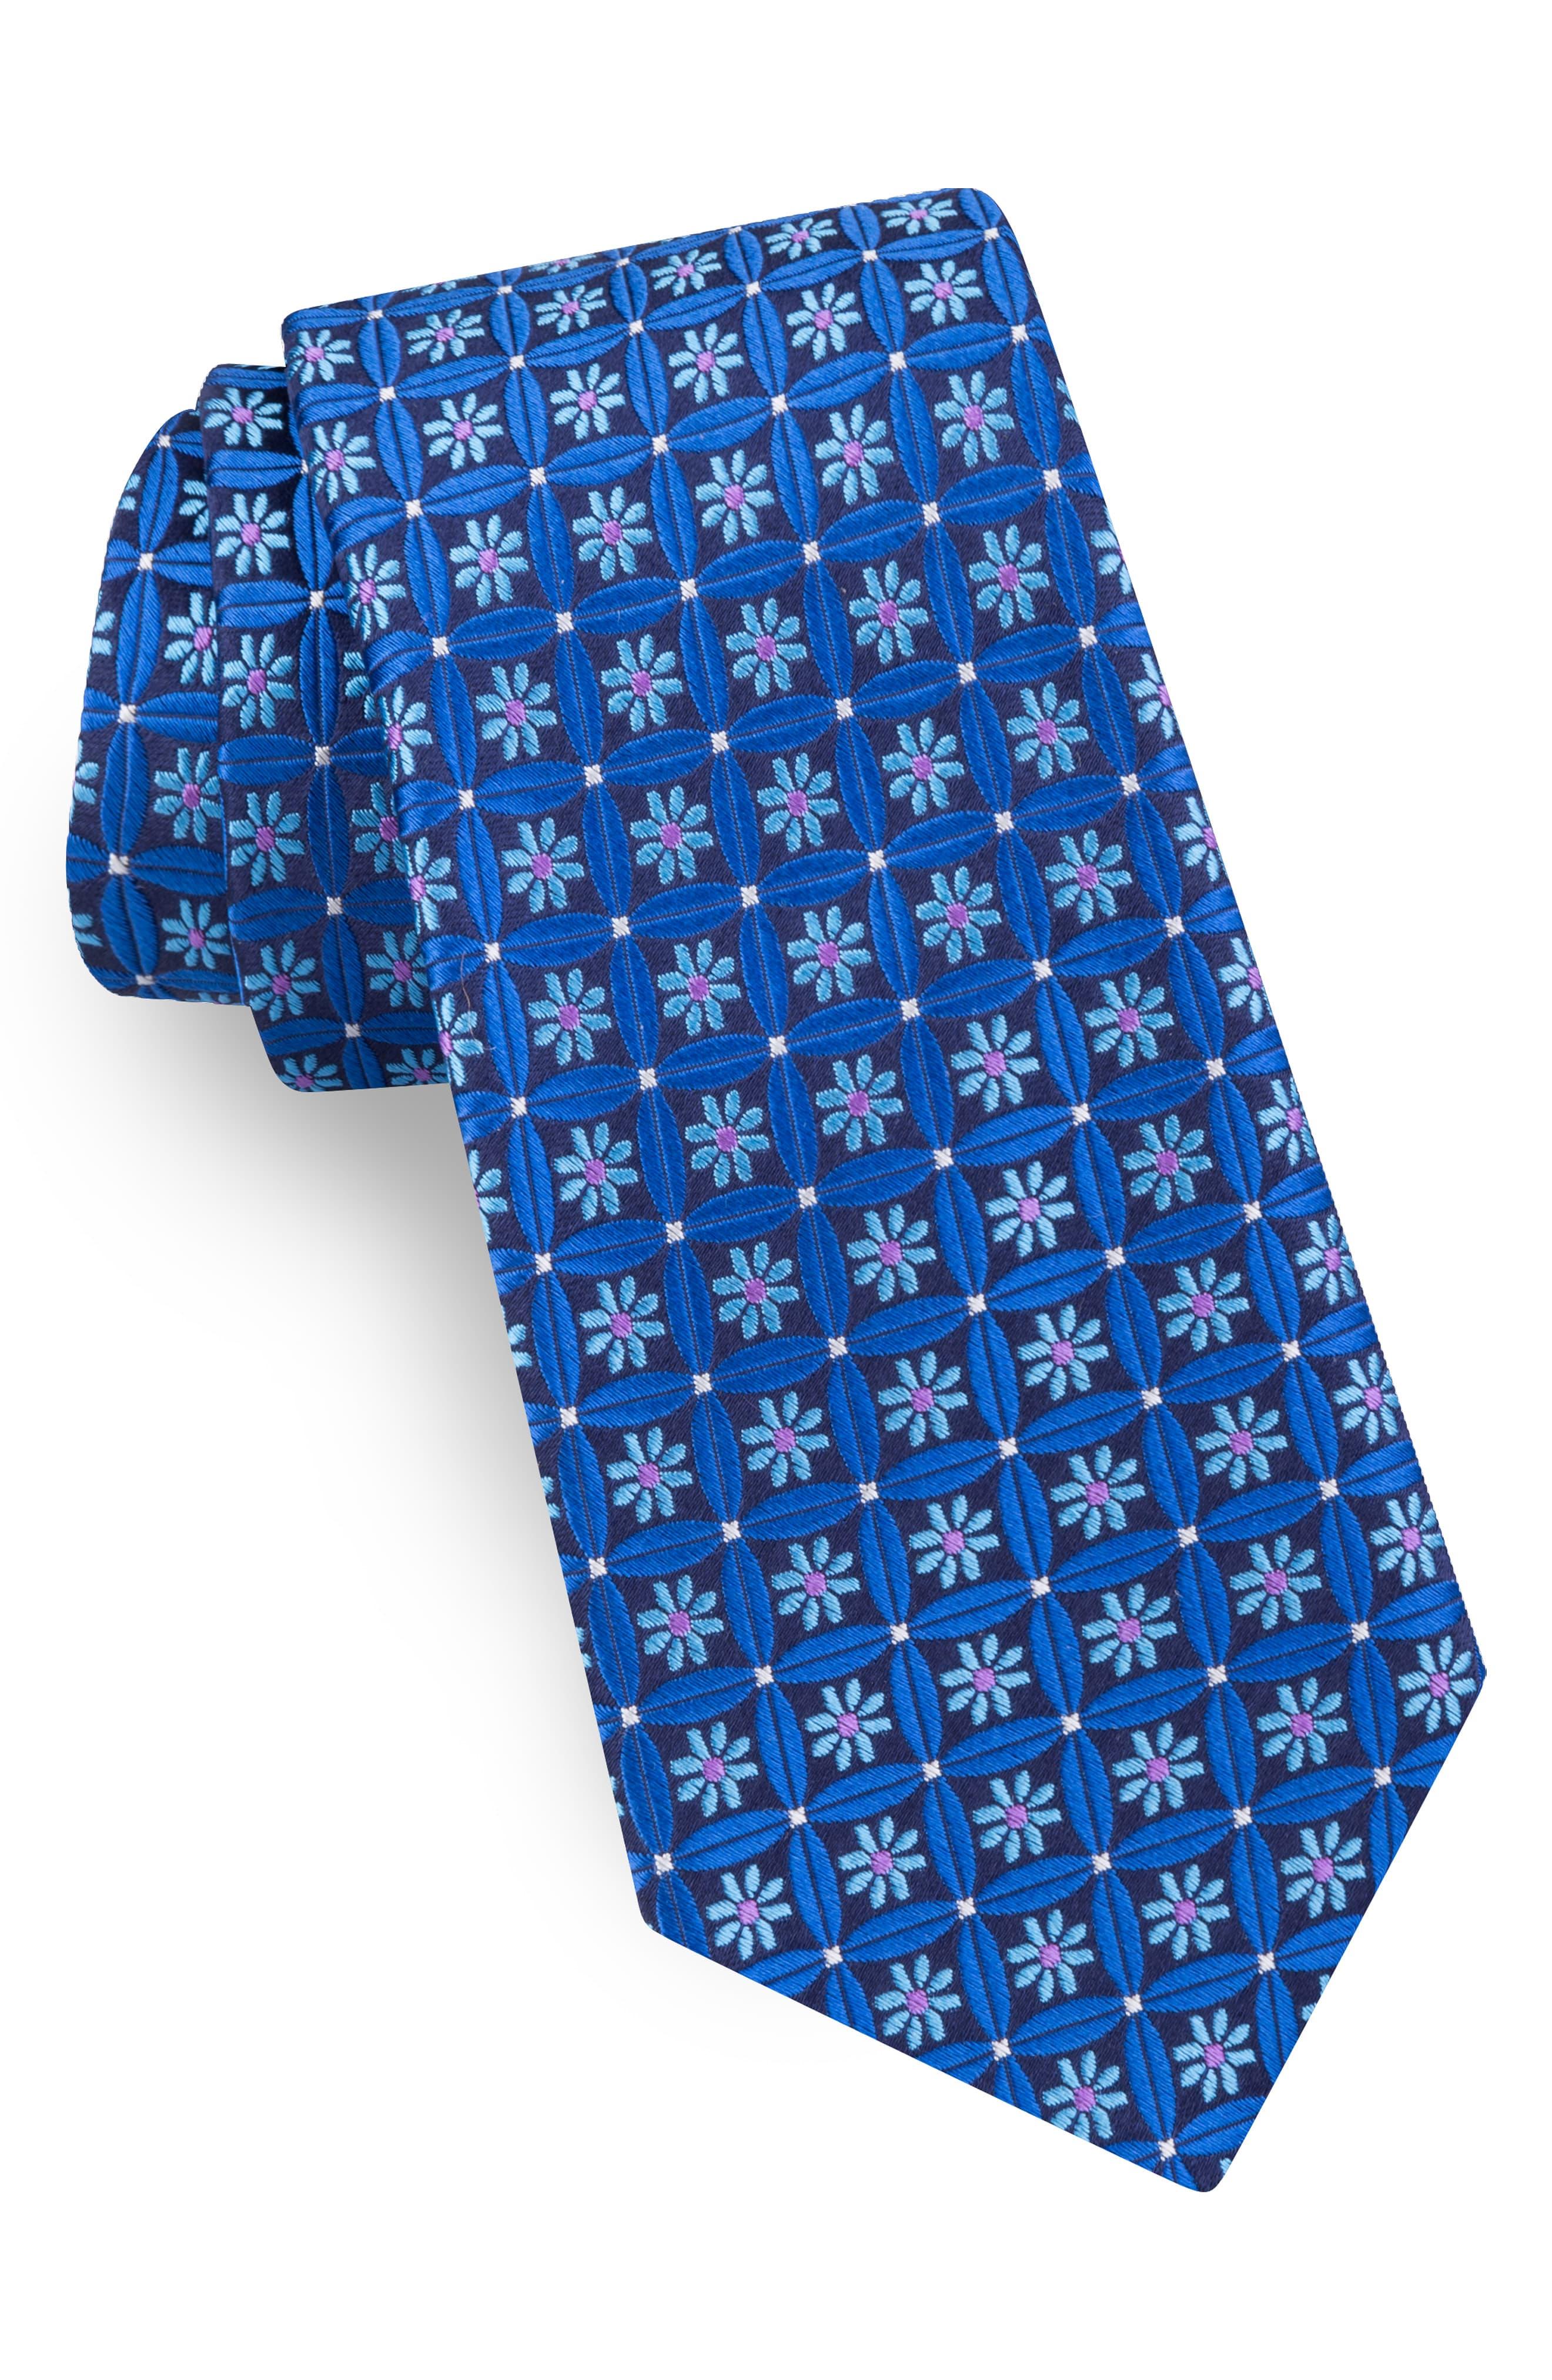 Ted Baker Flower Lattice Silk Tie in Blue for Men - Lyst